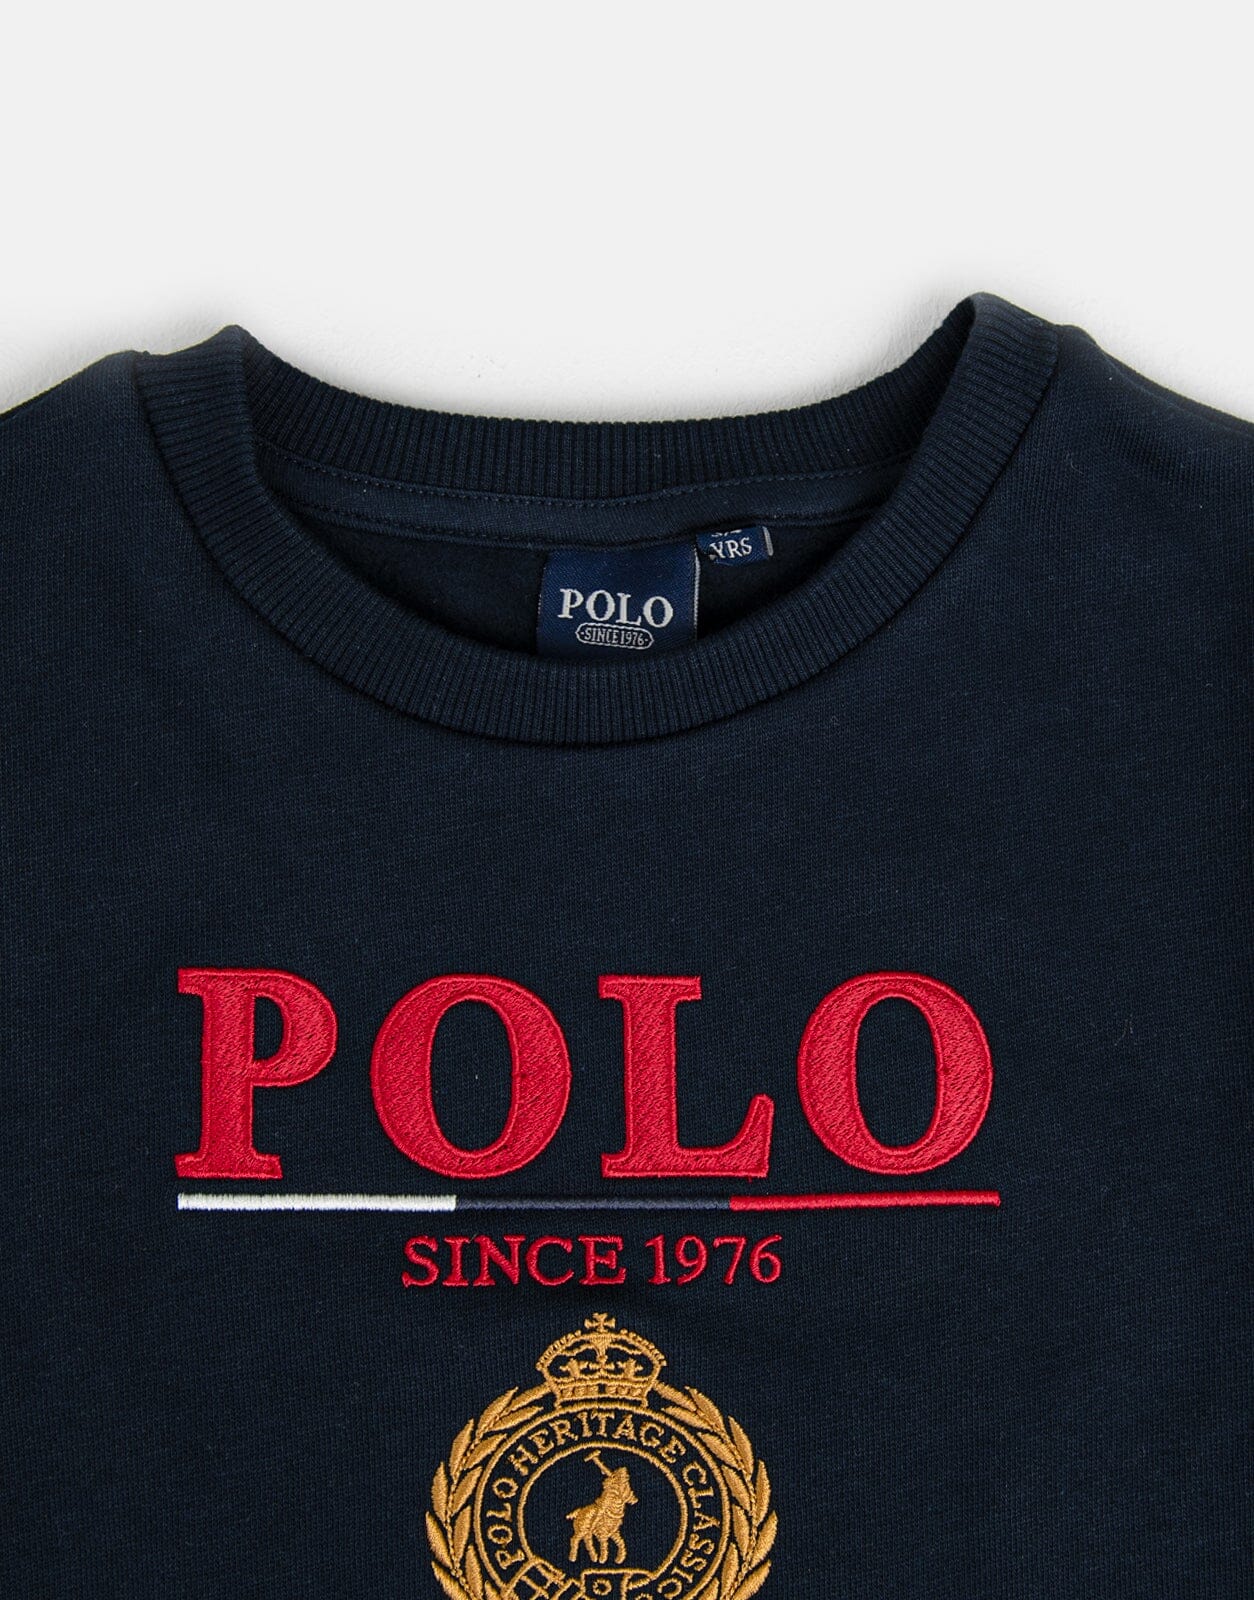 Polo Bradley Crested Navy Sweatshirt - Subwear